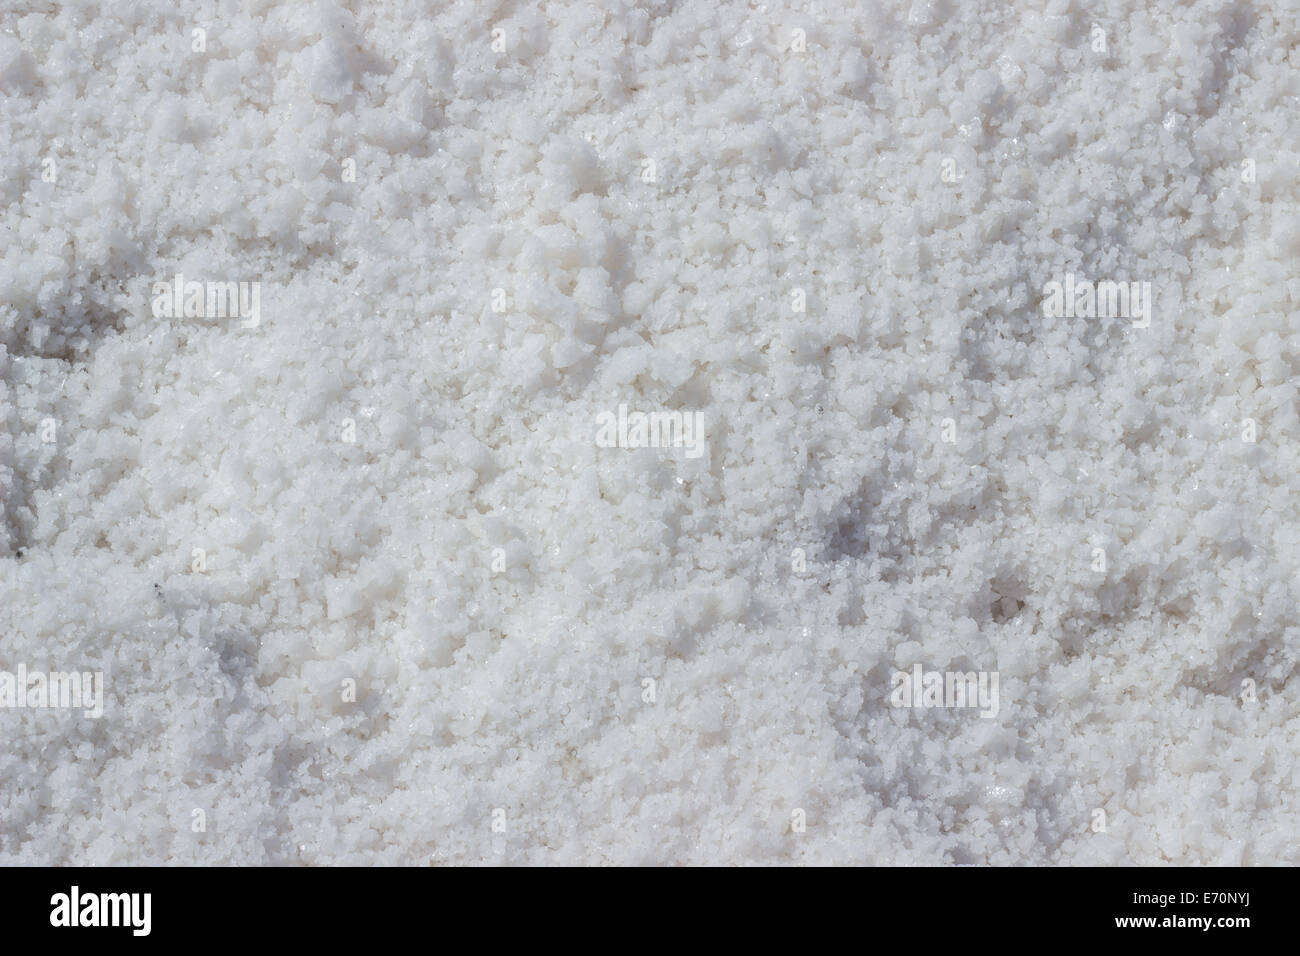 salt 'sea salt' textured white 'off white' background Stock Photo